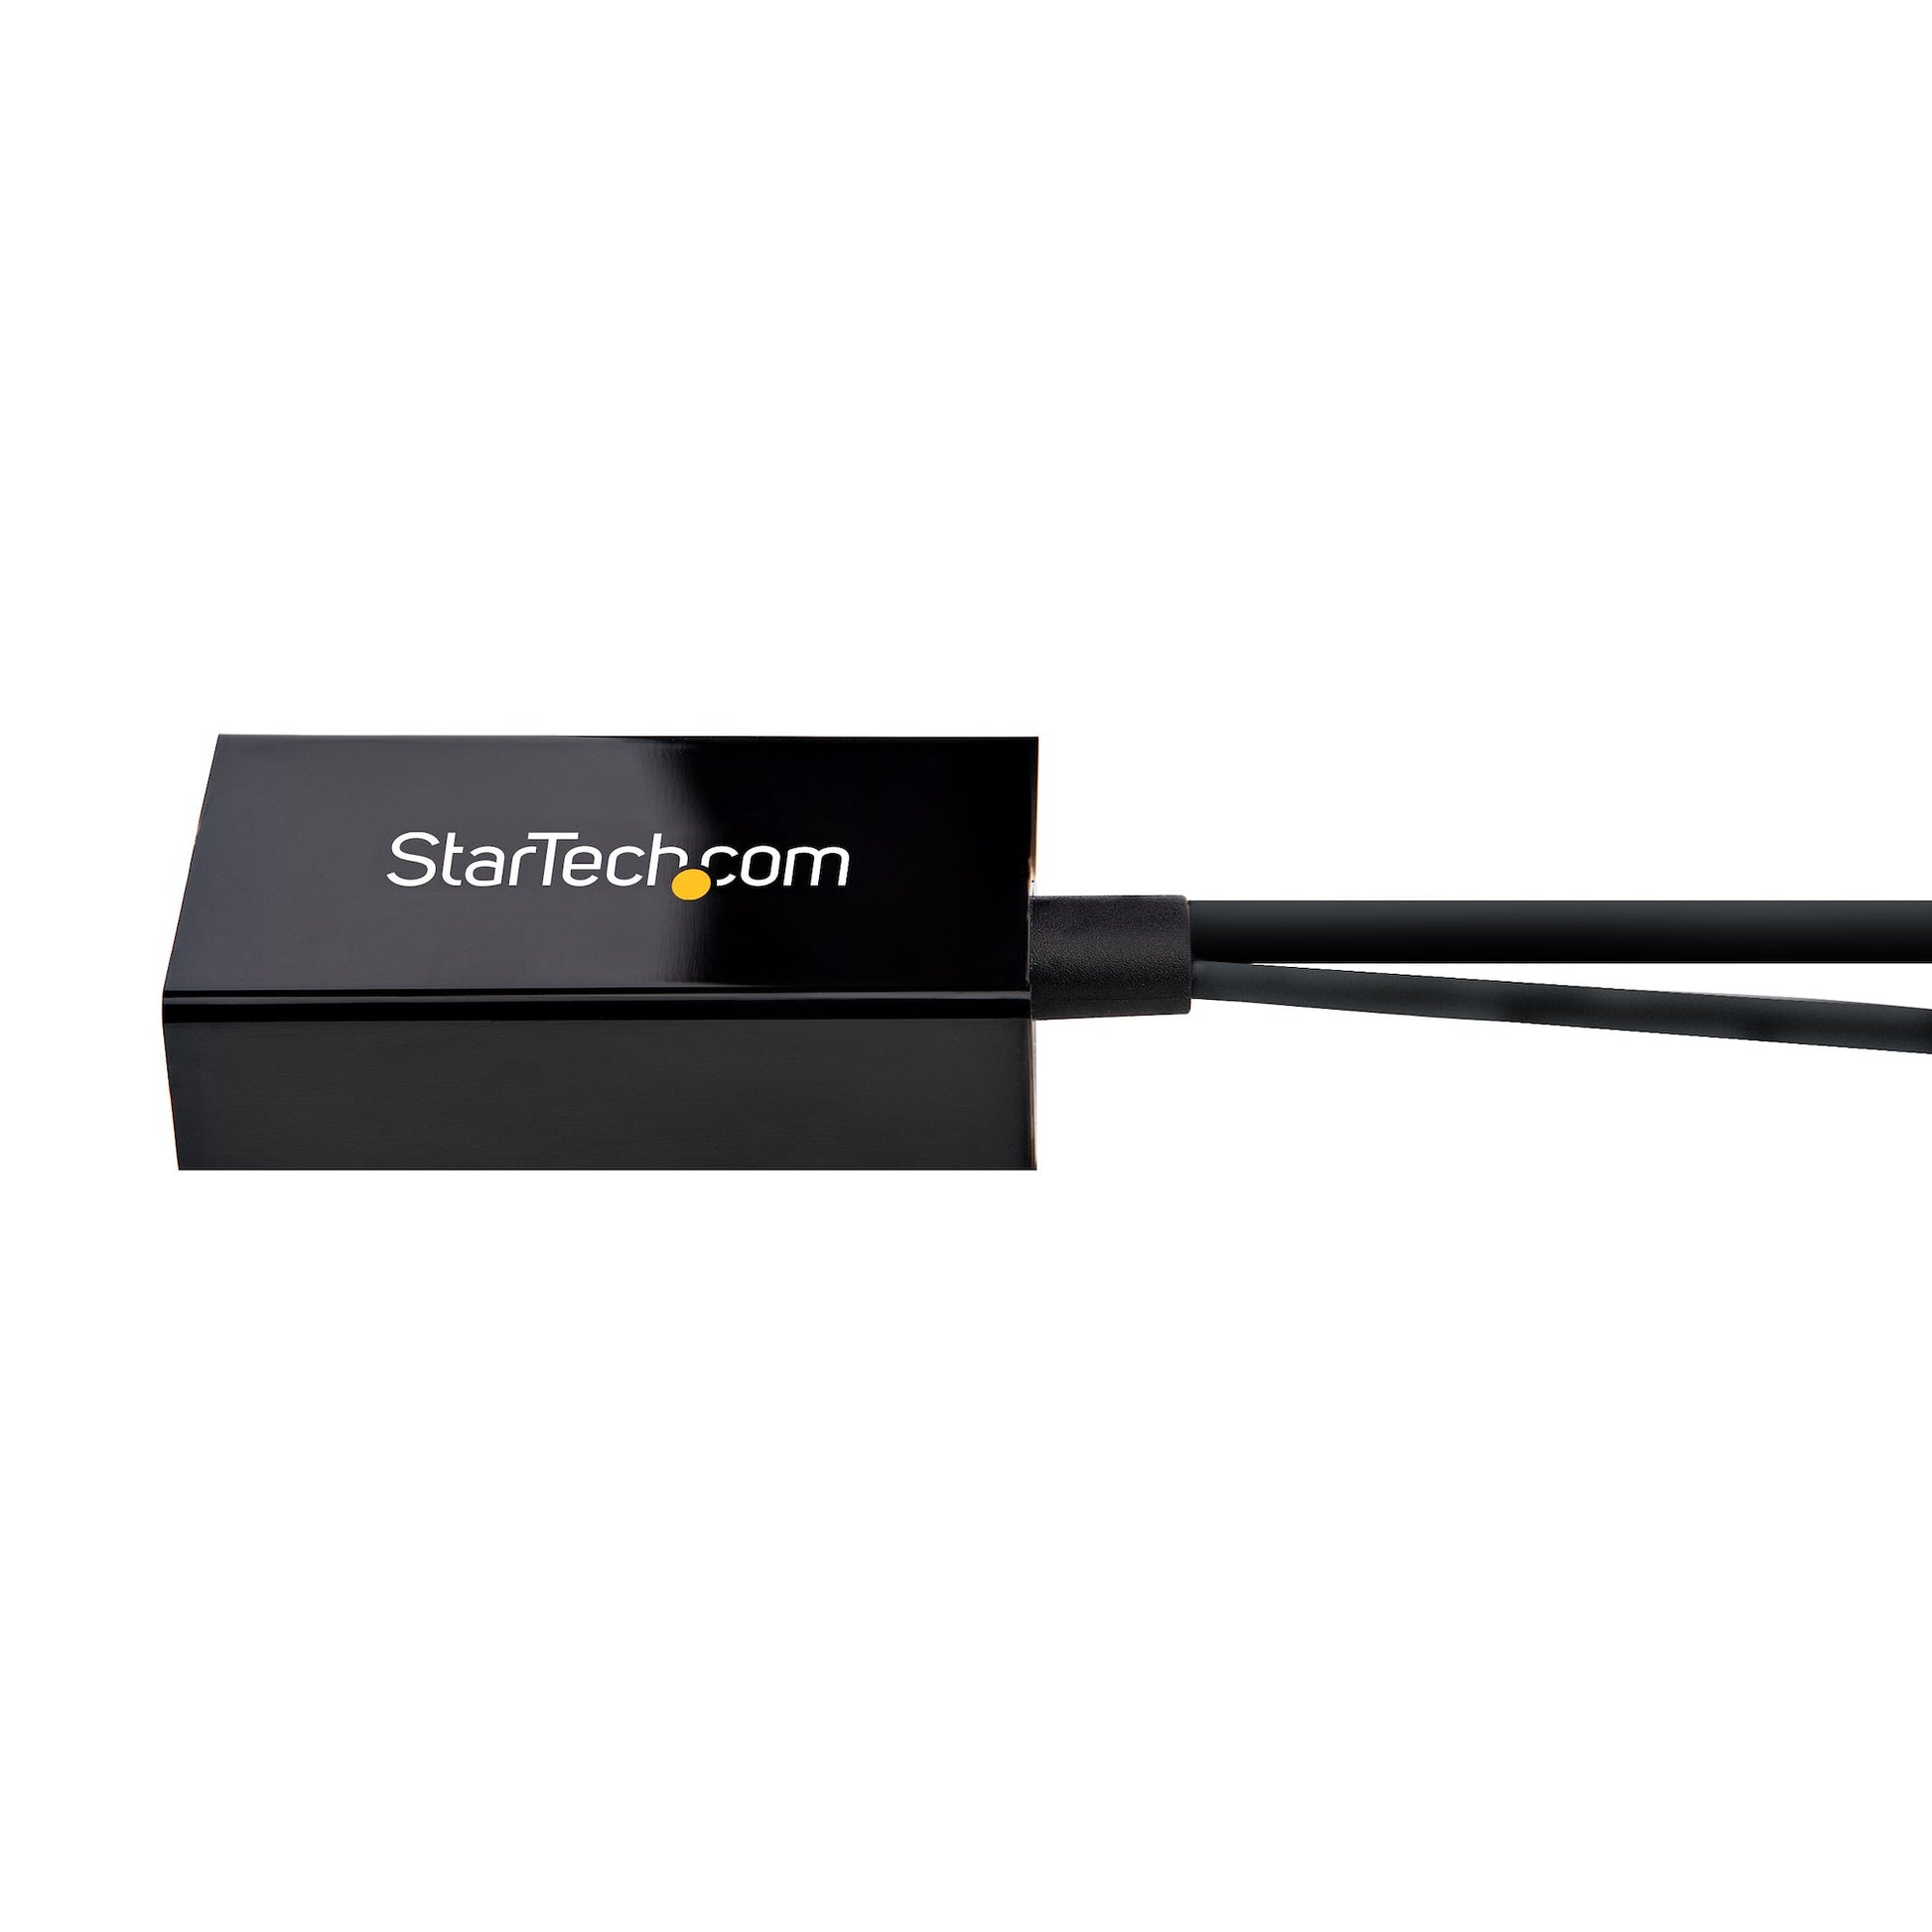 StarTech.com DVI to DisplayPort Adapter - USB Power - 1920 x 1200 - DVI to DisplayPort Converter - Video Adapter - DVI-D to DP-3